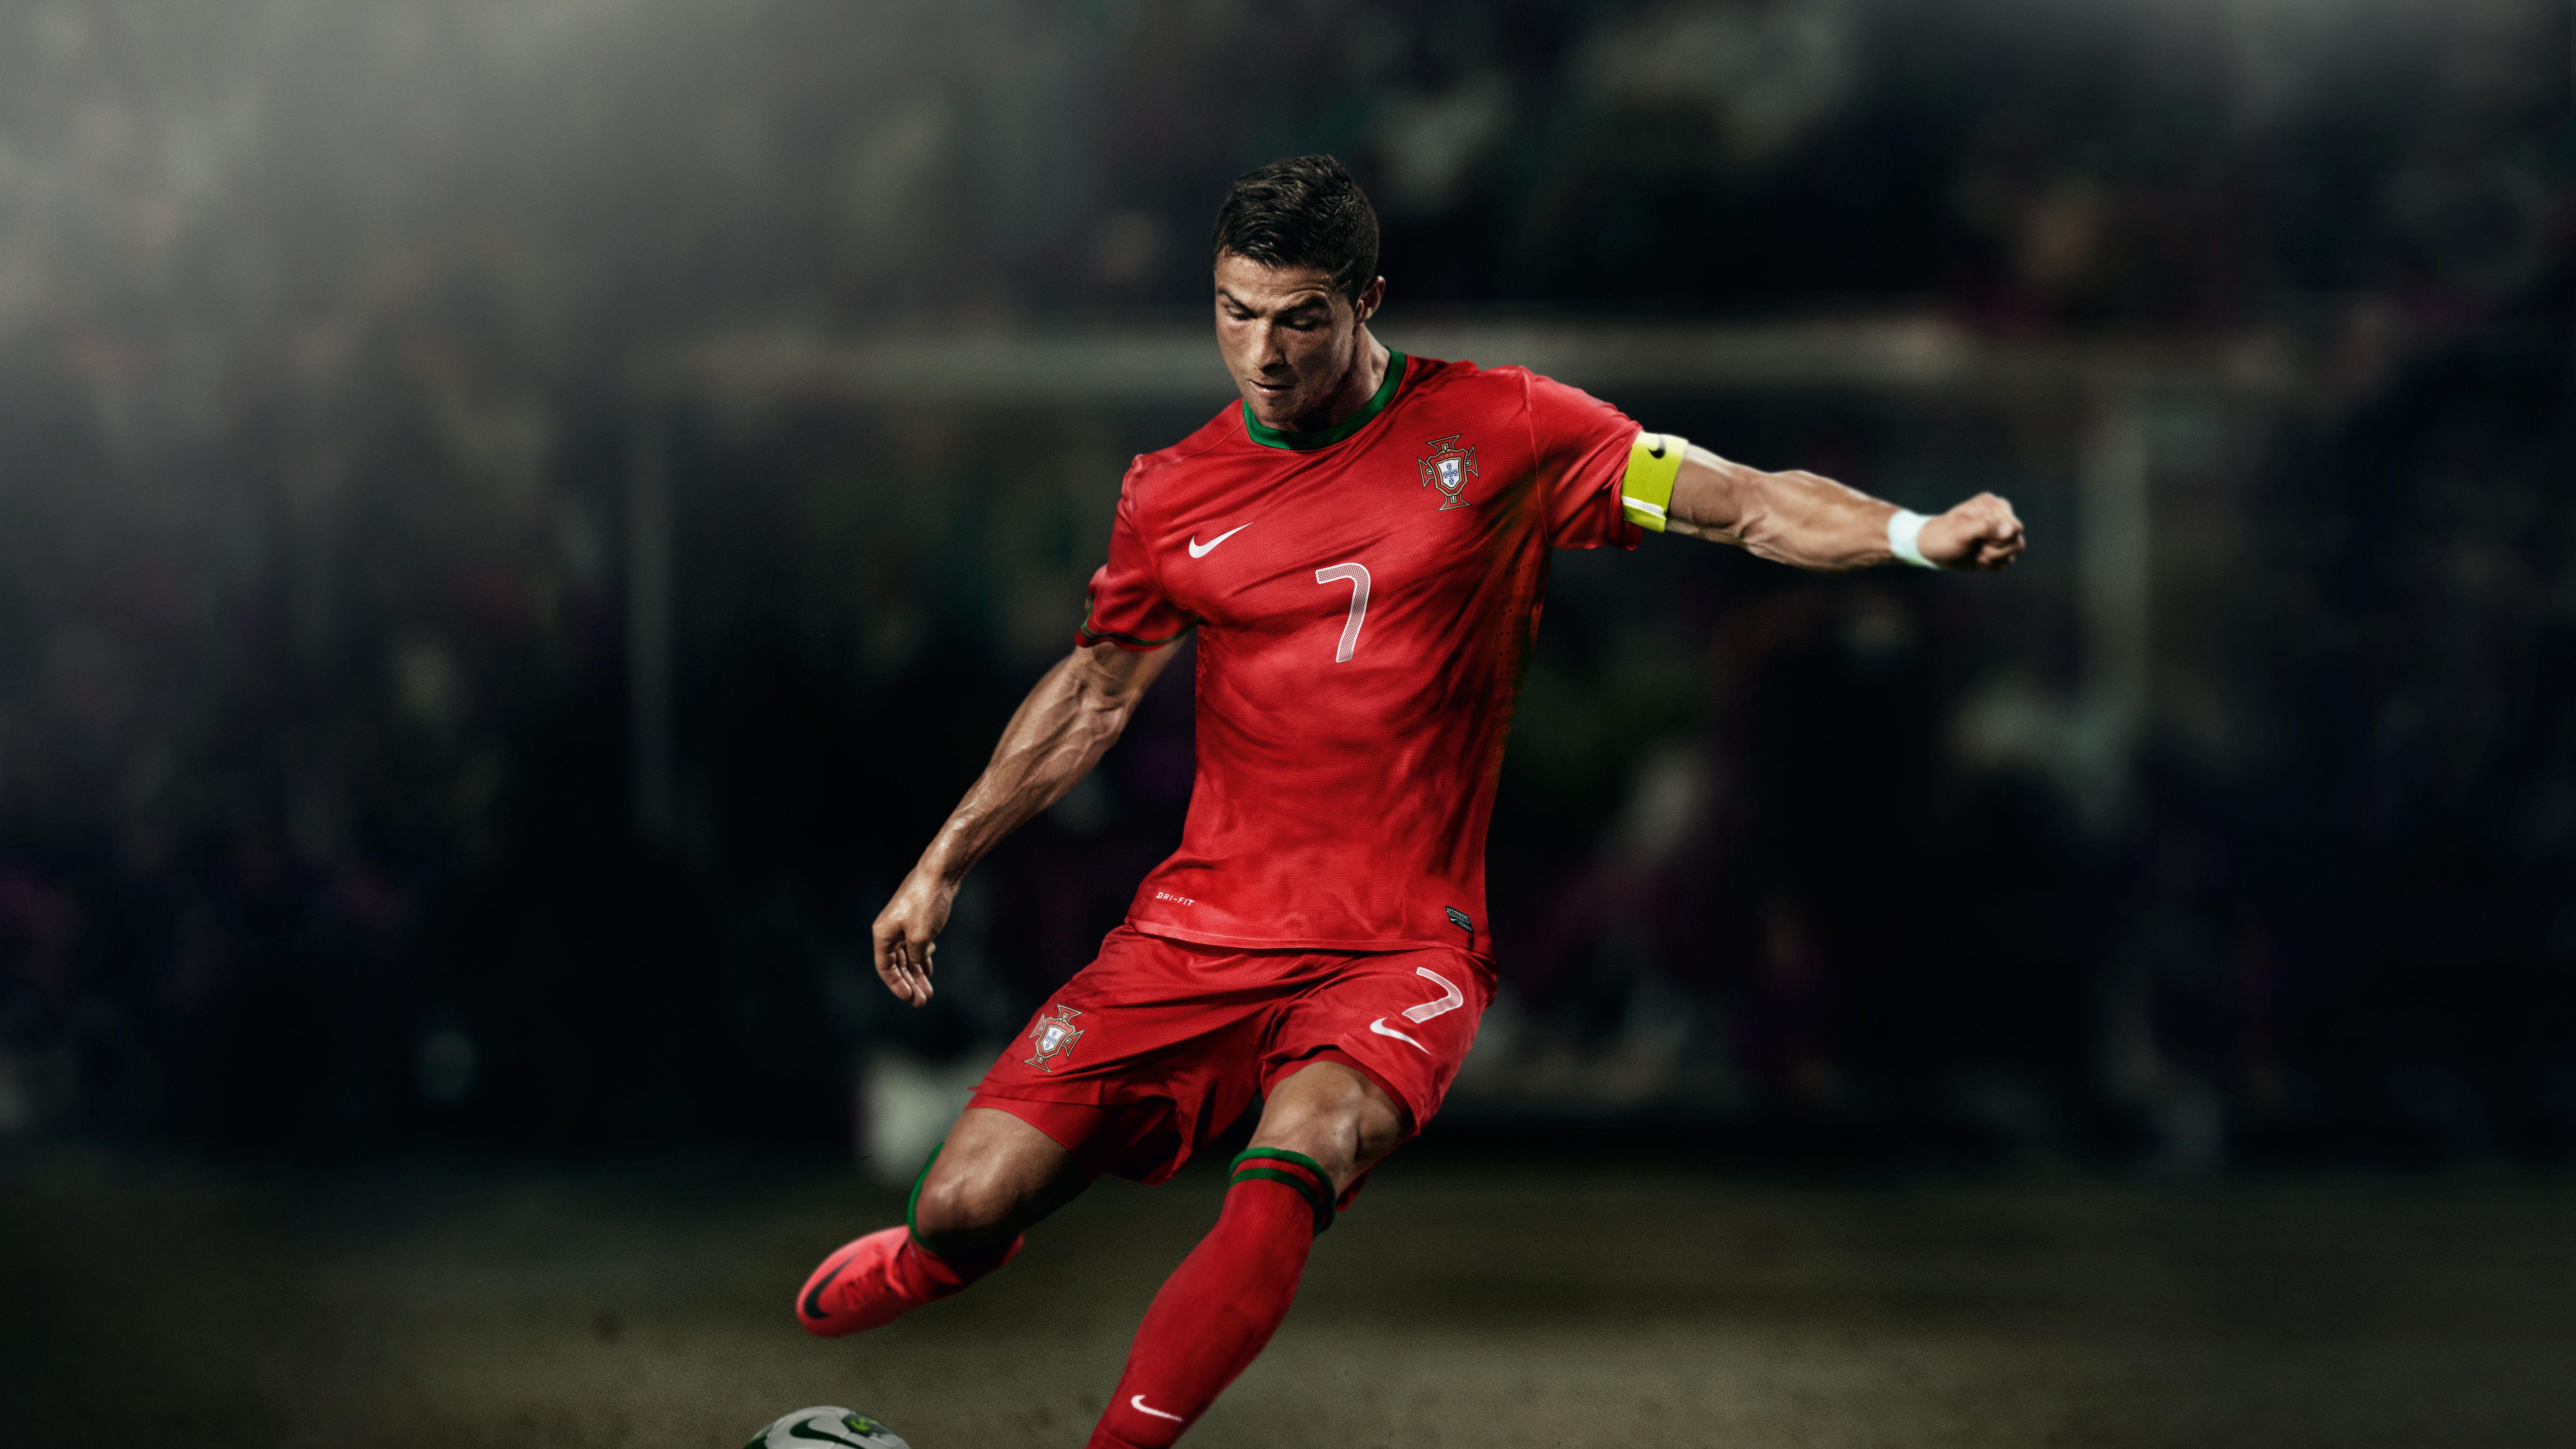 Wallpaper Cristiano Ronaldo, Soccer, Football player, 4K, Sports